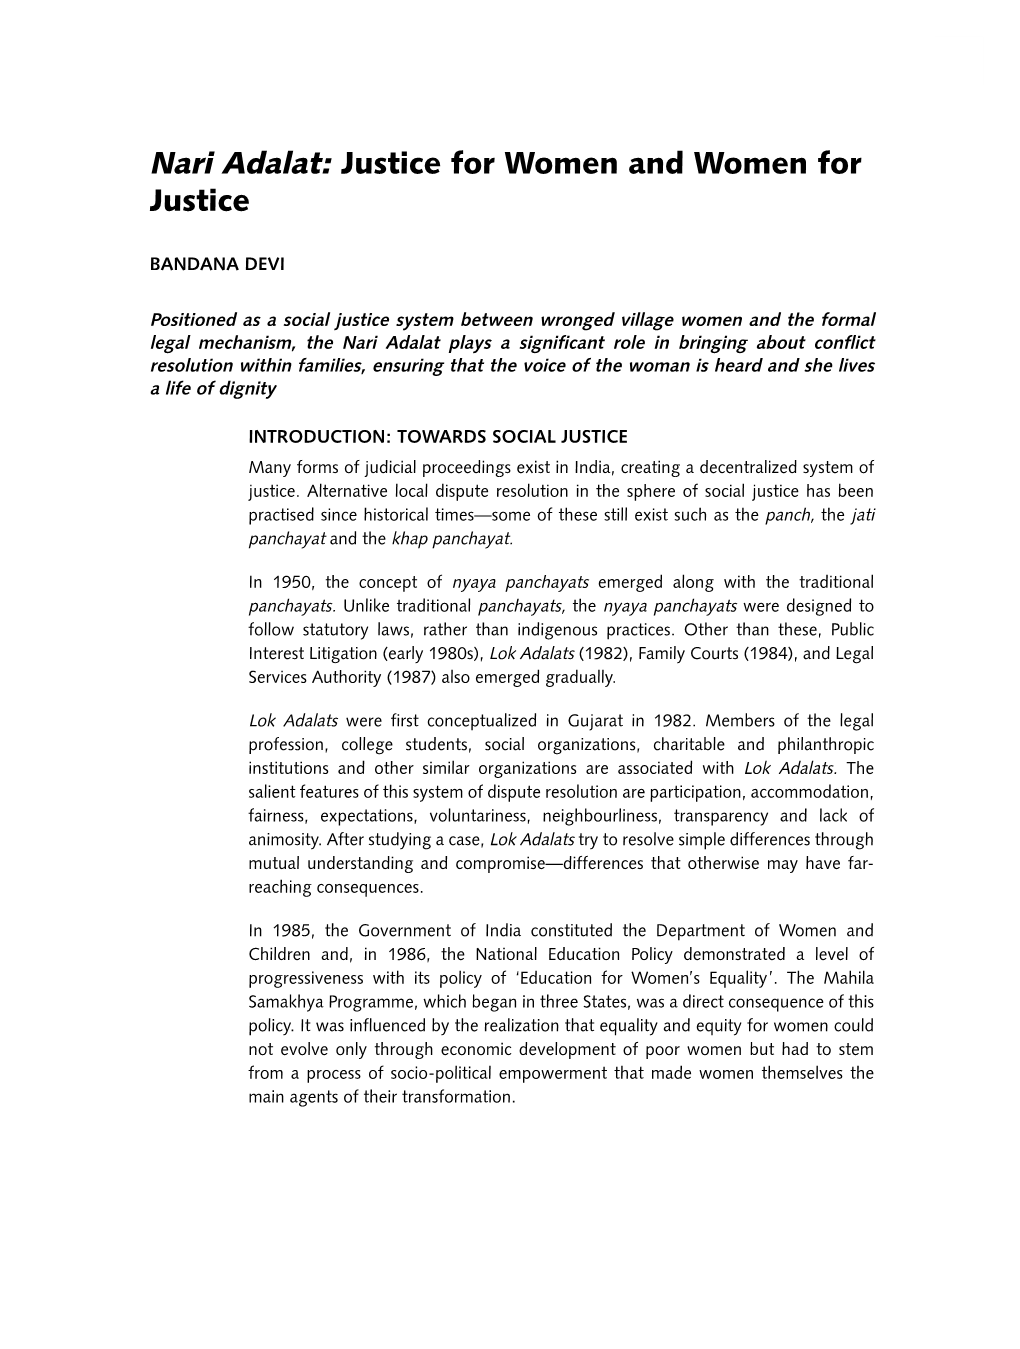 Nari Adalat: Justice for Women and Women for Justice